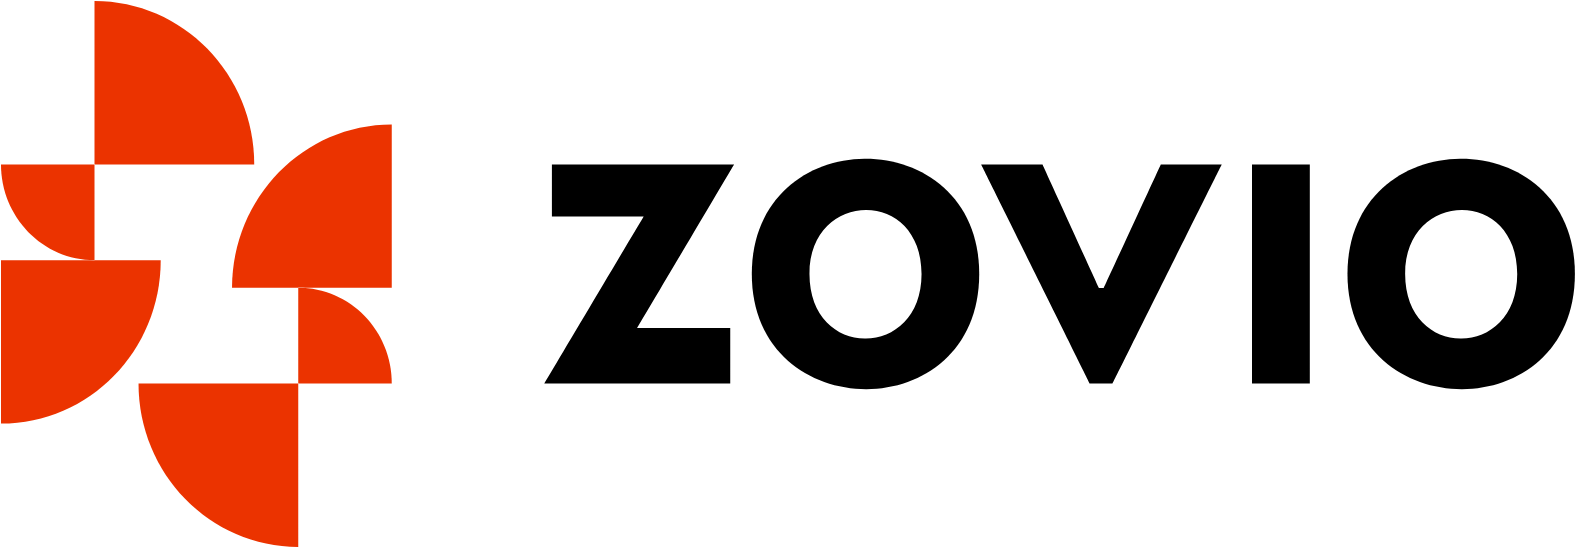 Zovio logo large (transparent PNG)